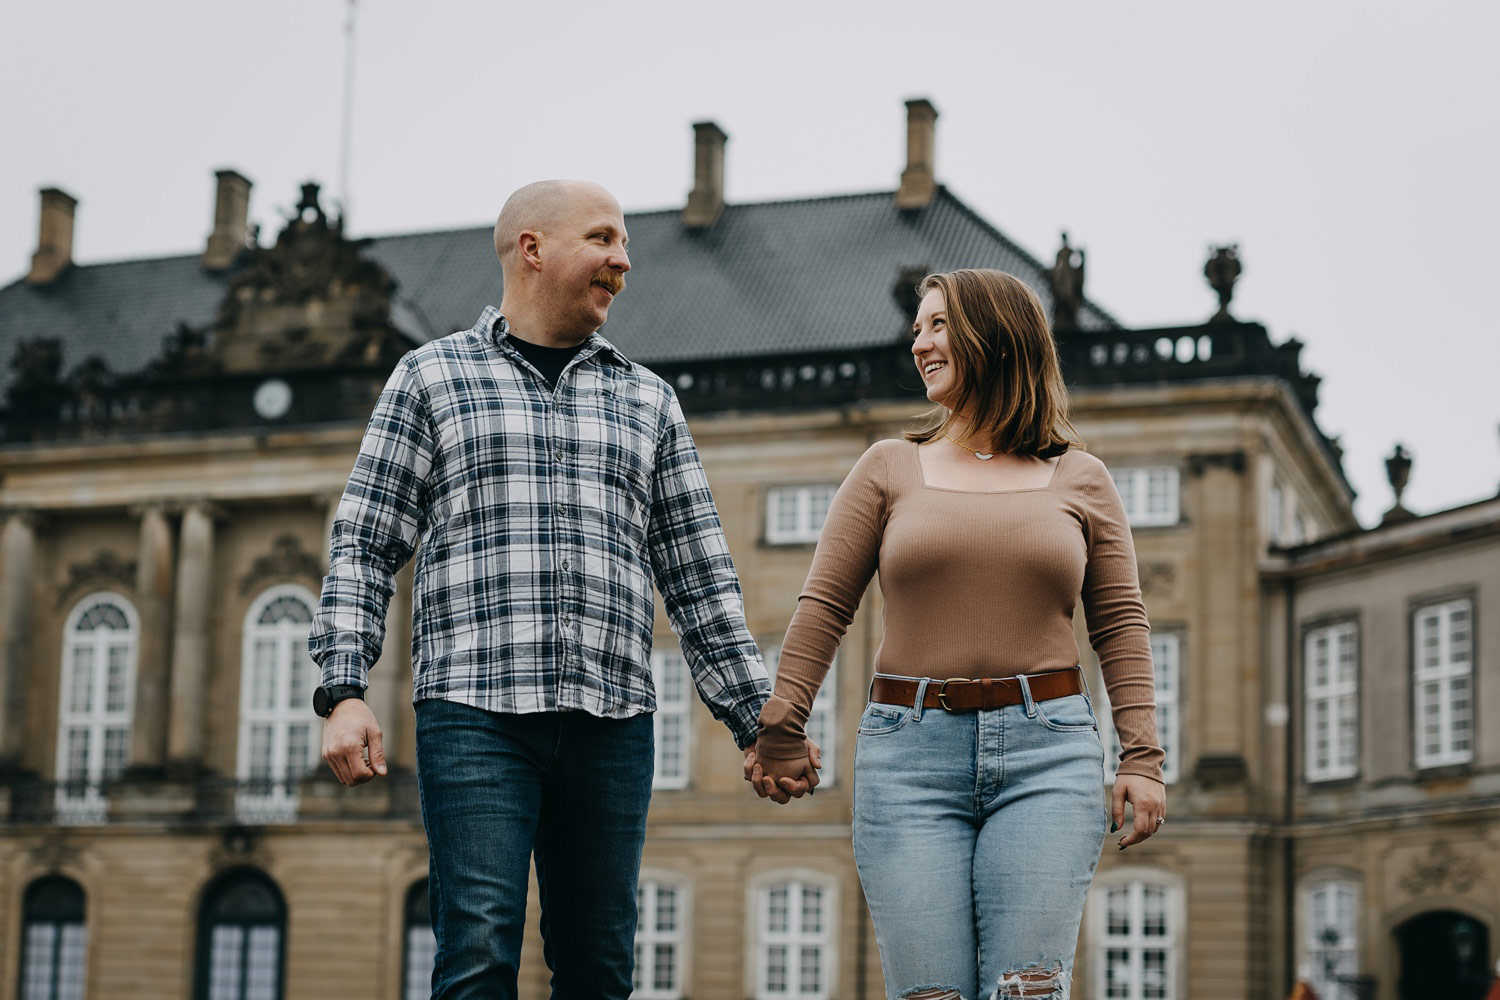 Honeymoon photos at Amalienborg Palace in Copenhagen